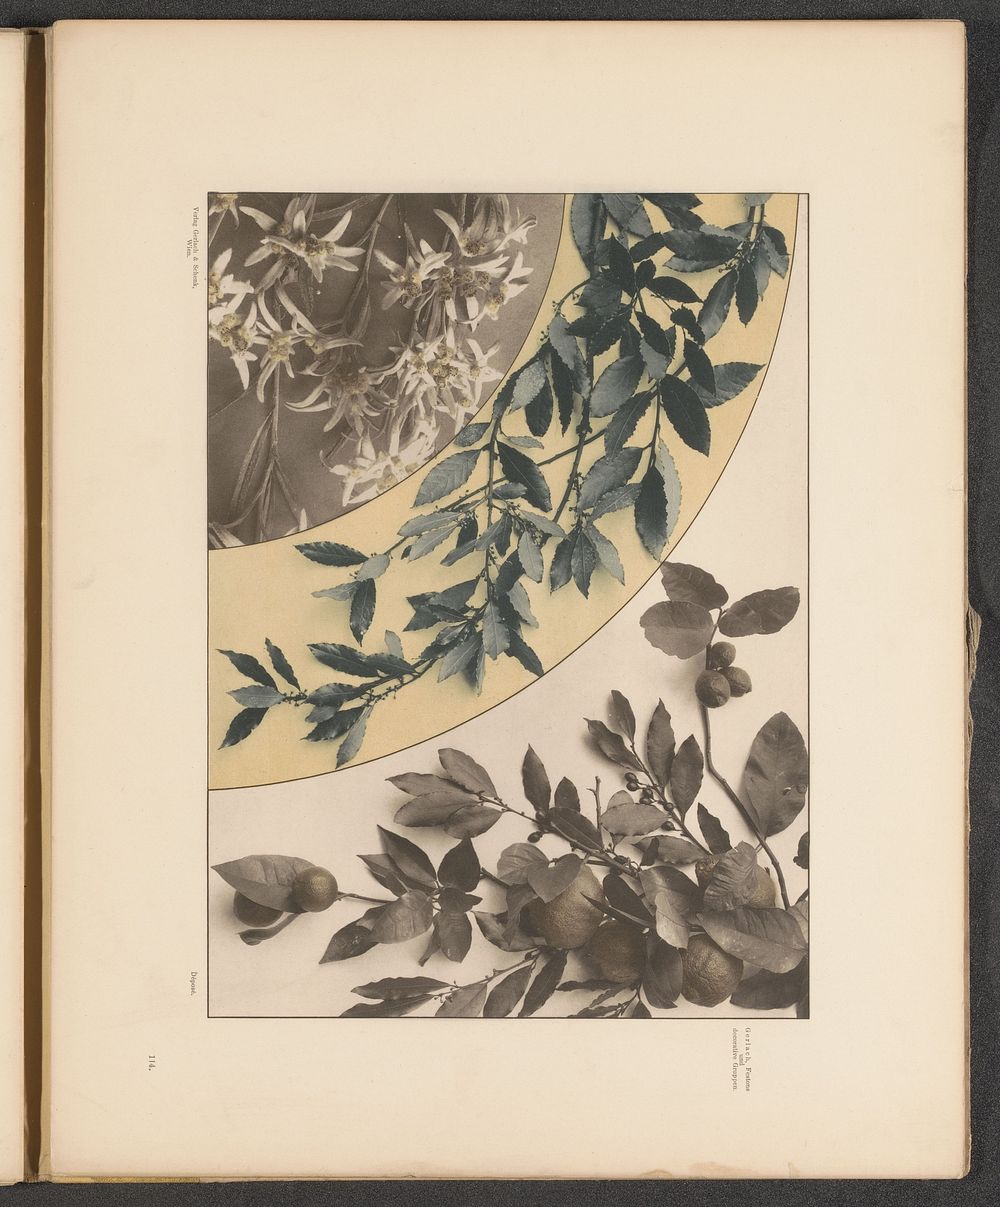 Vlakken met citroenen, lauriertakken en edelweiss (c. 1887 - in or before 1897) by anonymous and Gerlach and Schenk